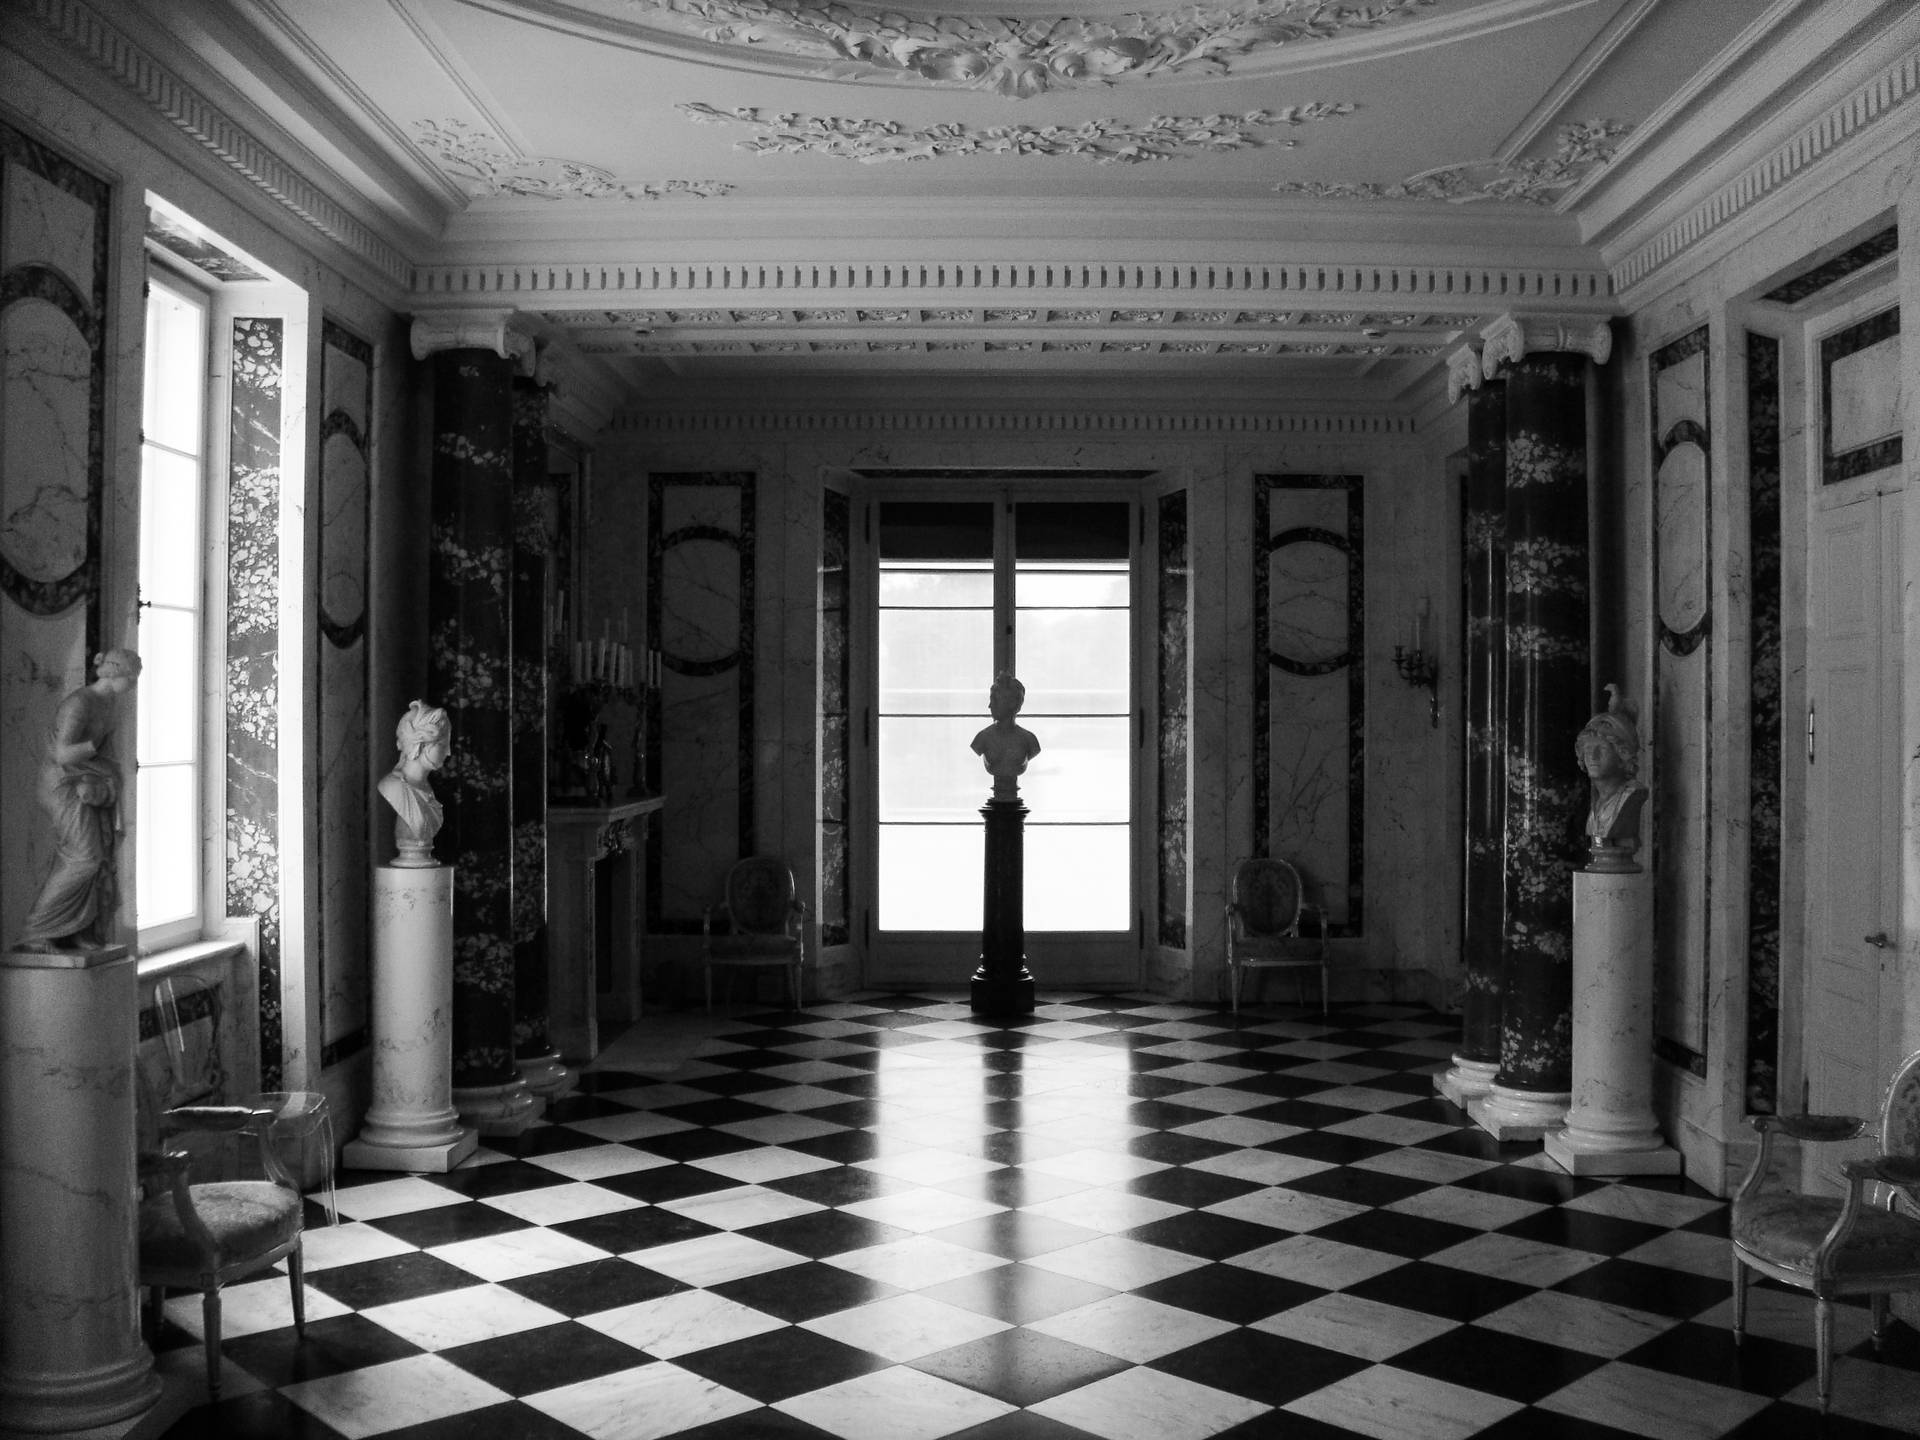 Monochrome Hallway With Checkered Floor